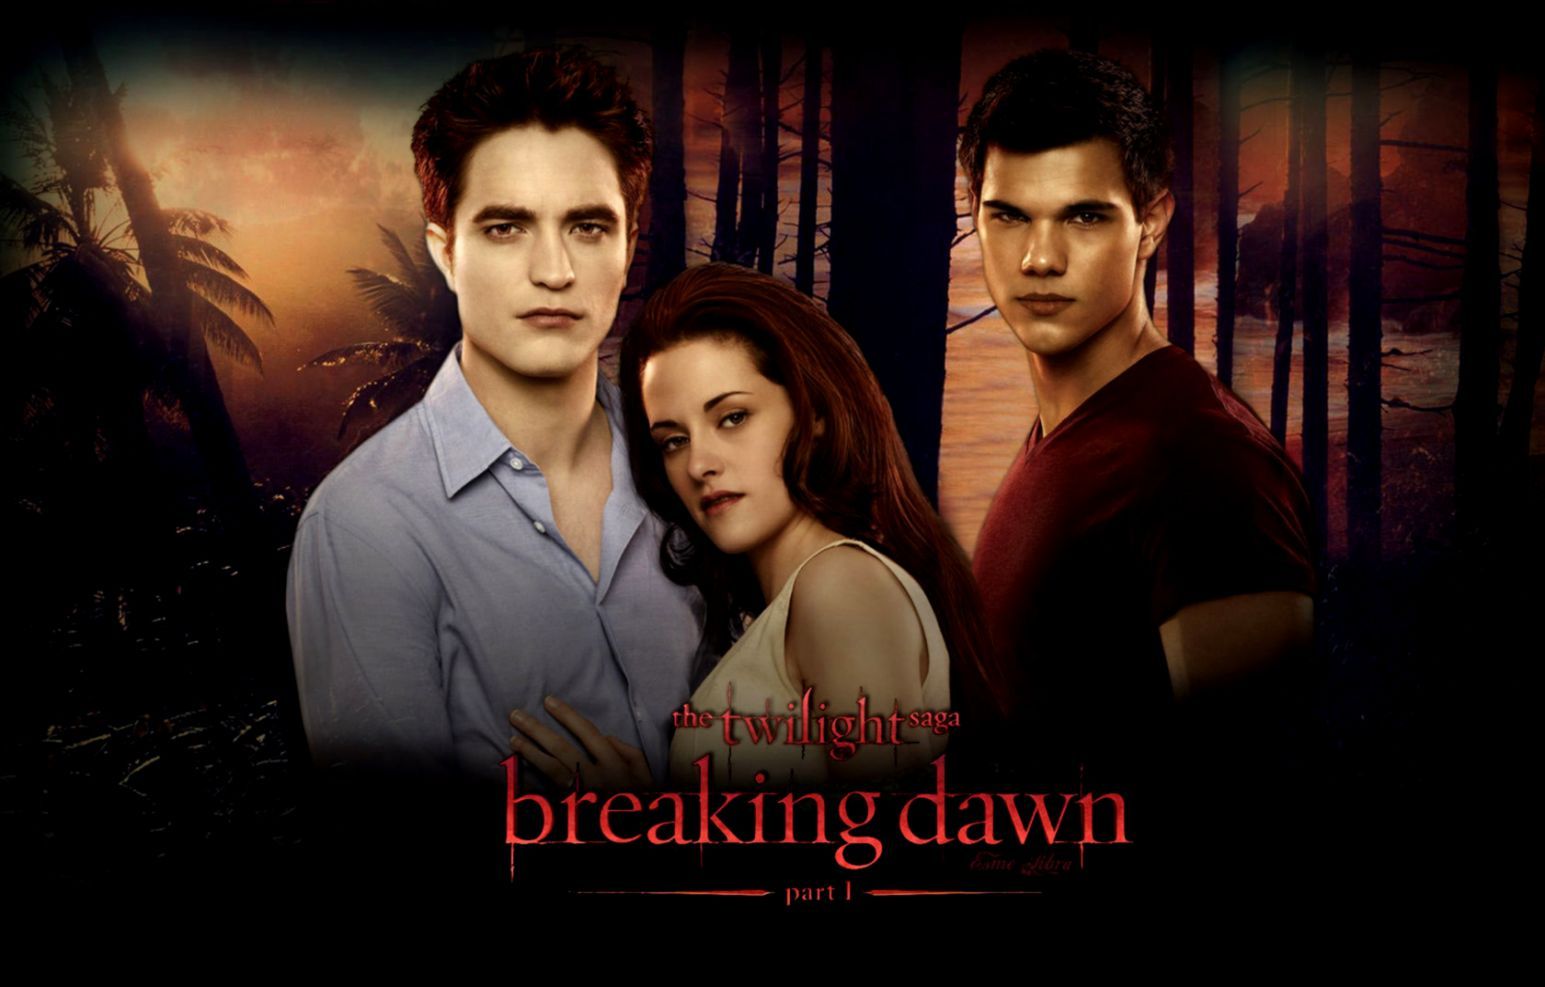 Twilight Breaking Dawn Wallpaper. Full HD Wallpaper